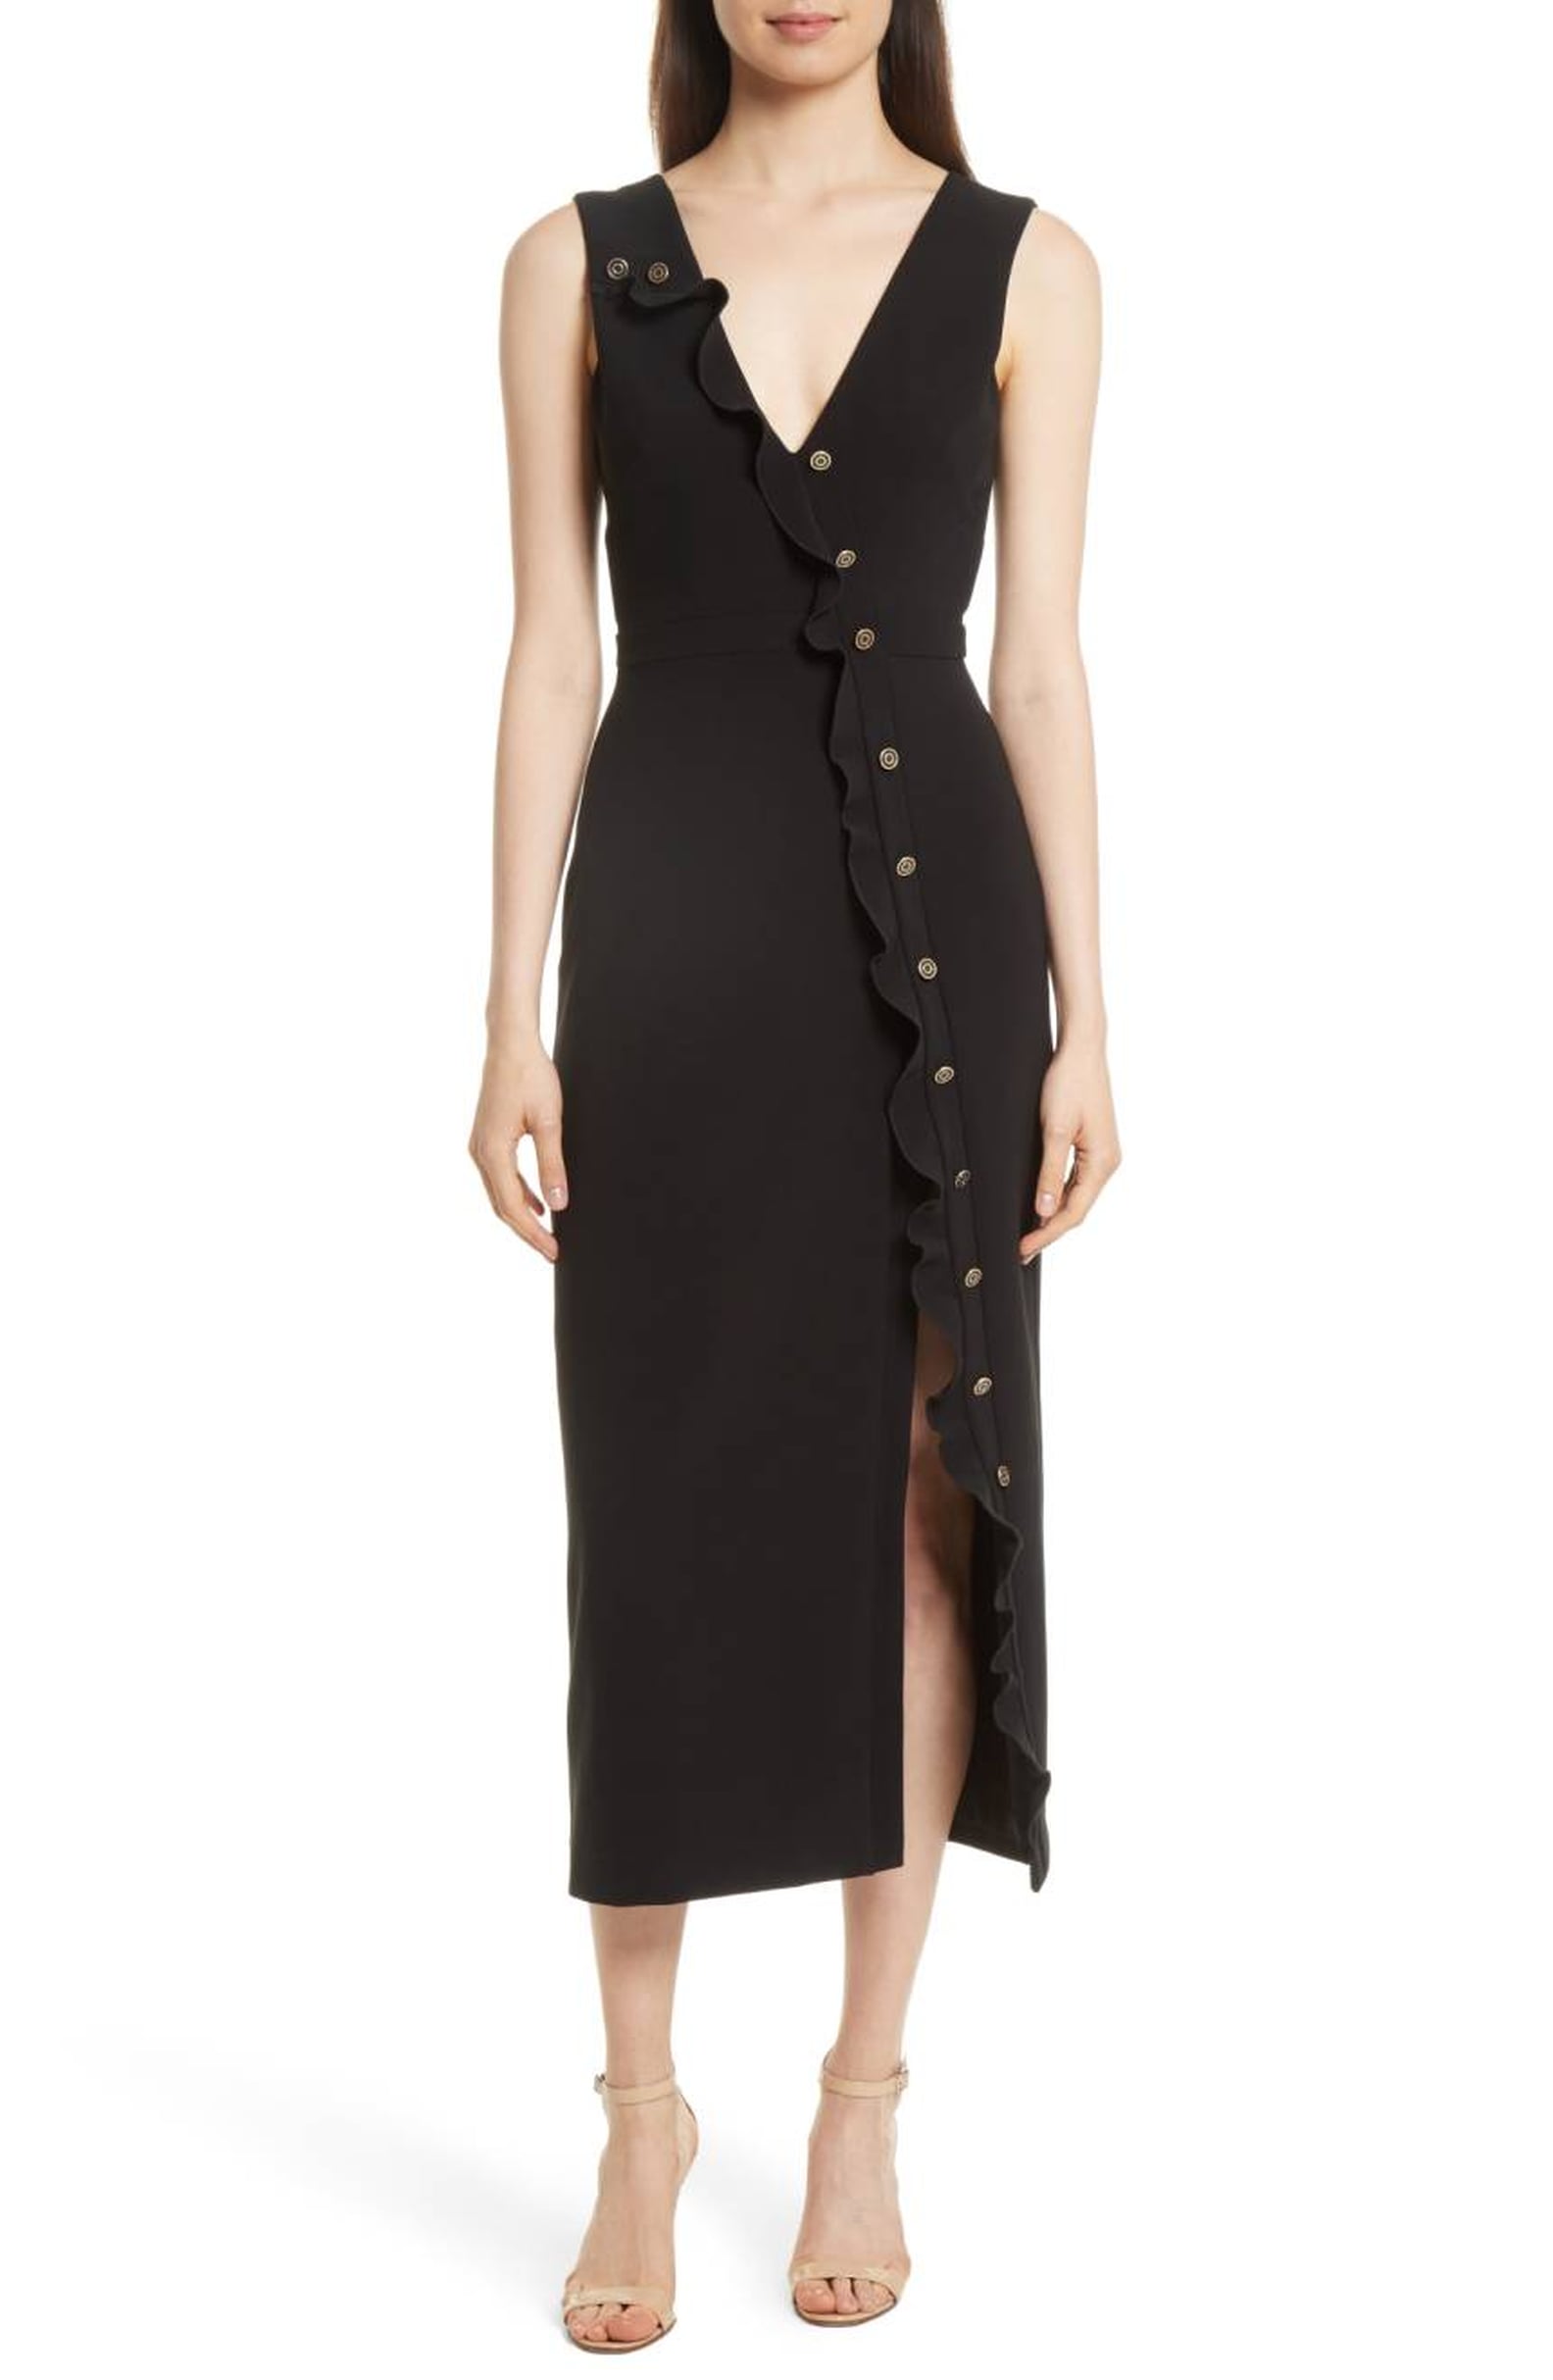 Melania Trump in Black Button Dress | POPSUGAR Fashion